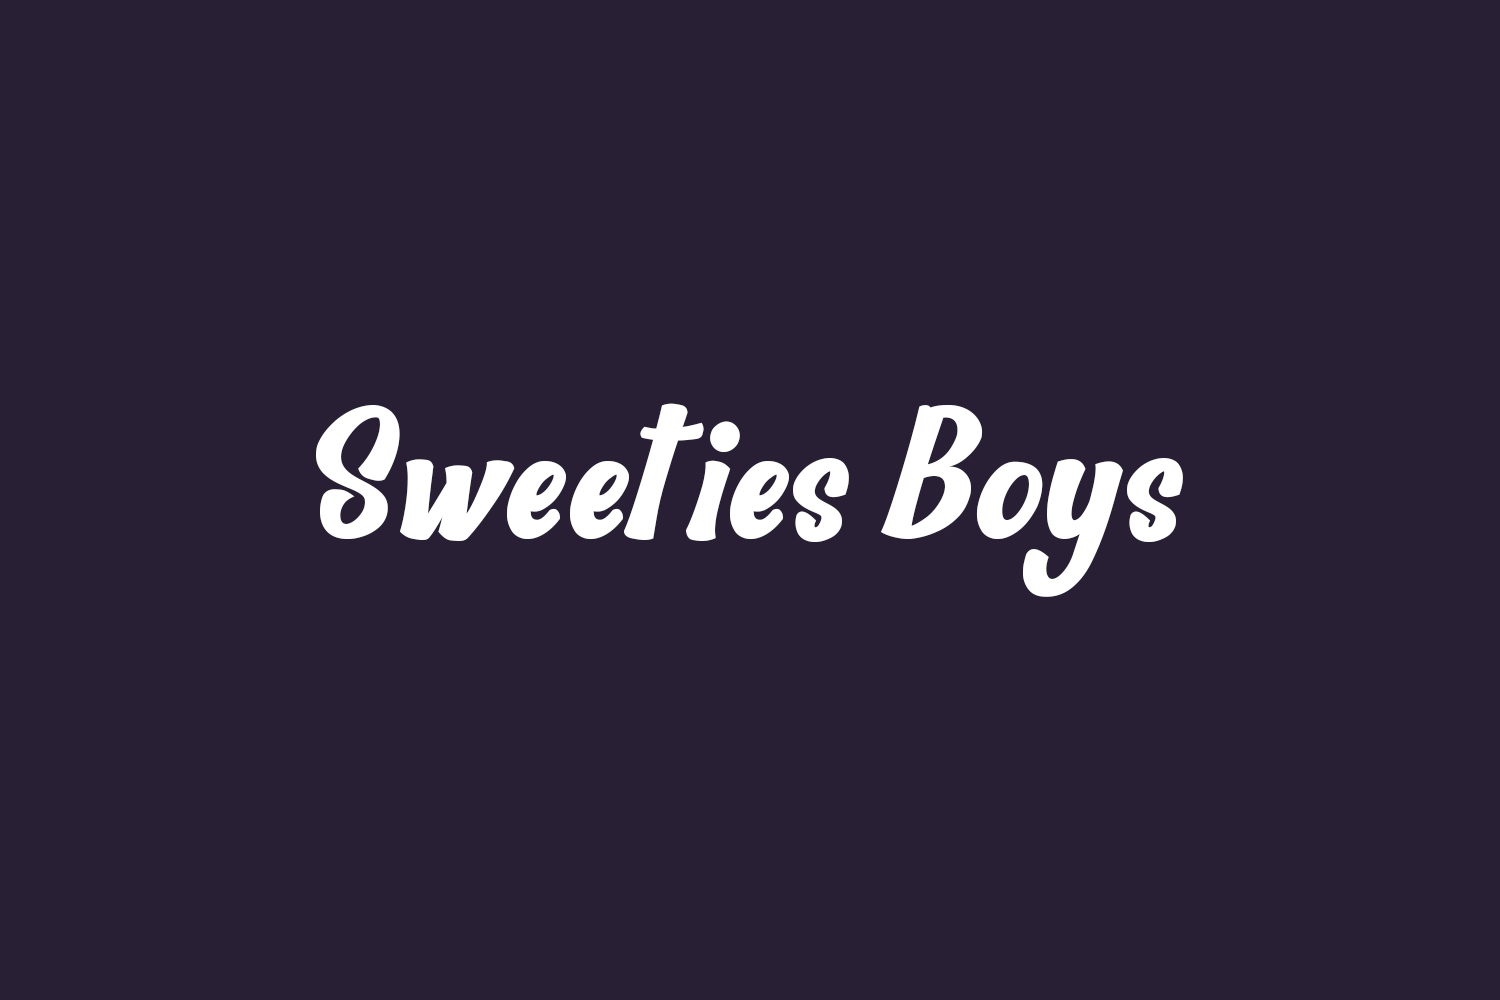 Sweeties Boys Free Font